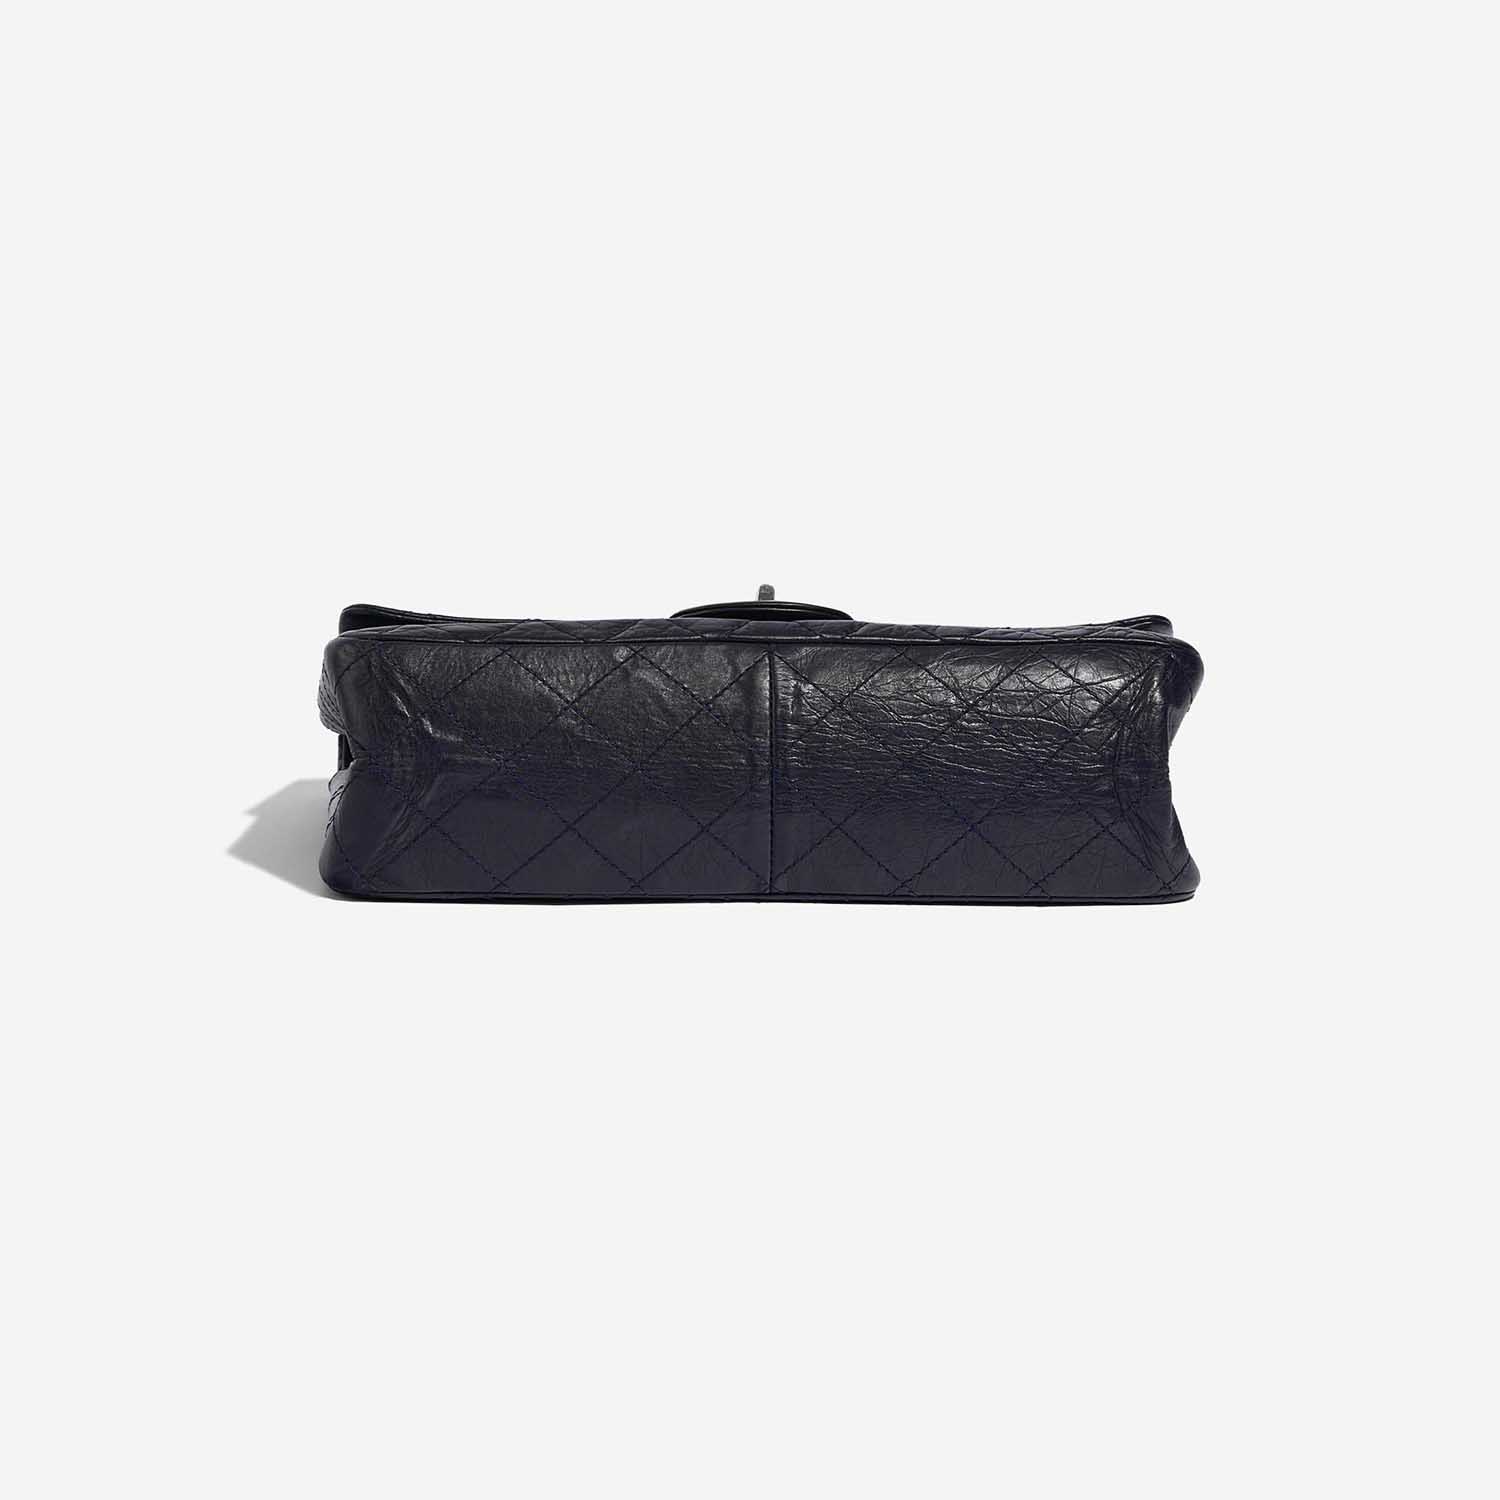 Pre-owned Chanel bag 2.55 Reissue 227 Aged Calfskin Dark Blue Bottom | Sell your designer bag on Saclab.com